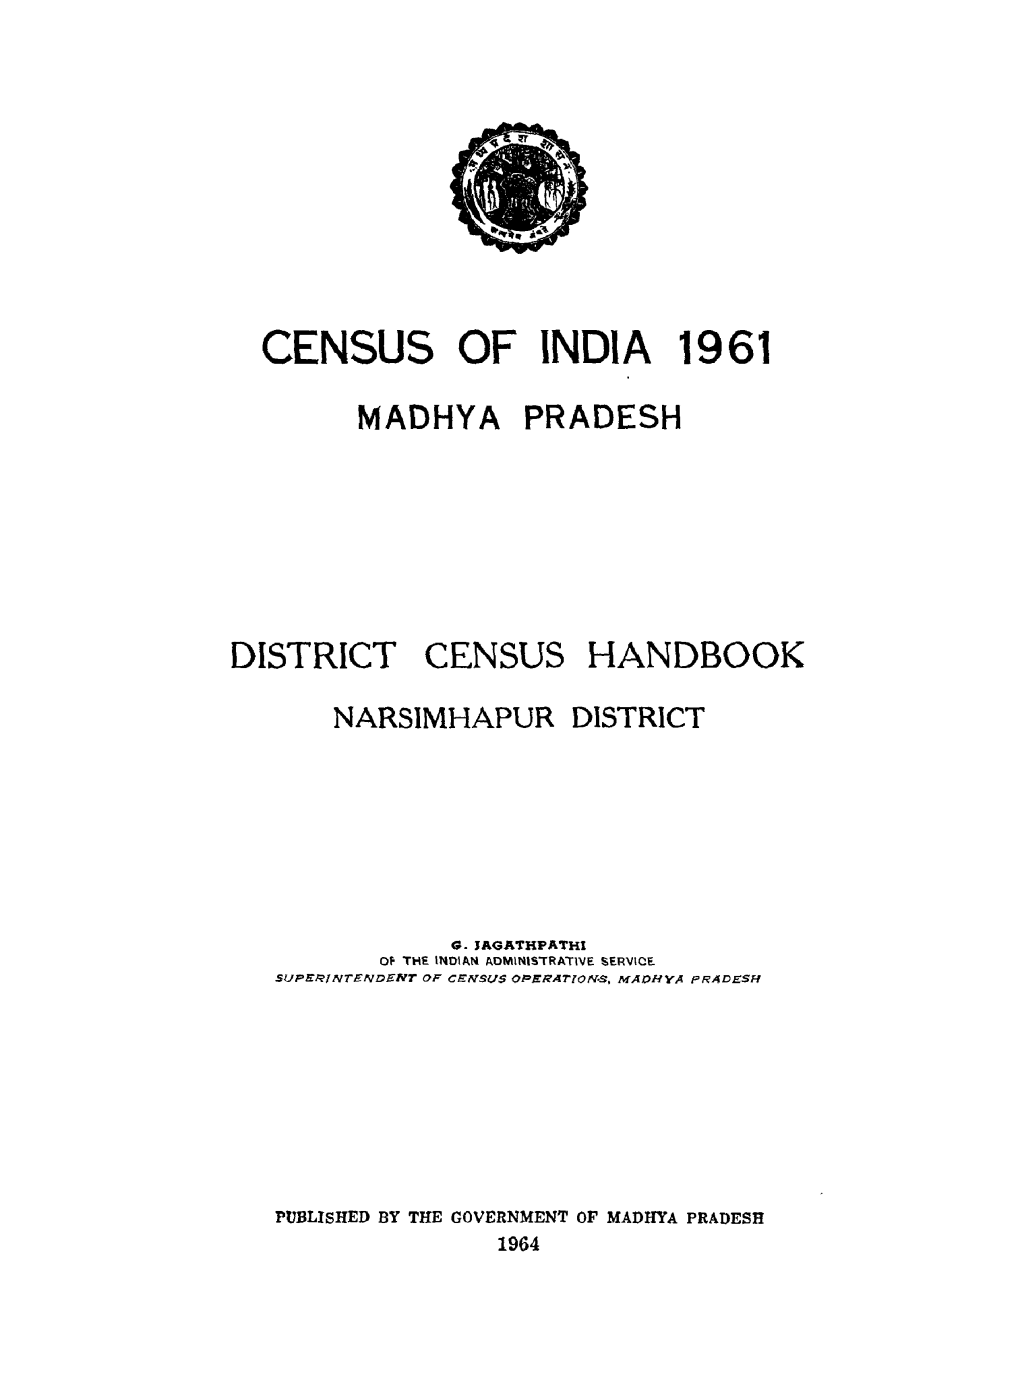 District Census Handbook, Narsimhapur, Madhya Pradesh